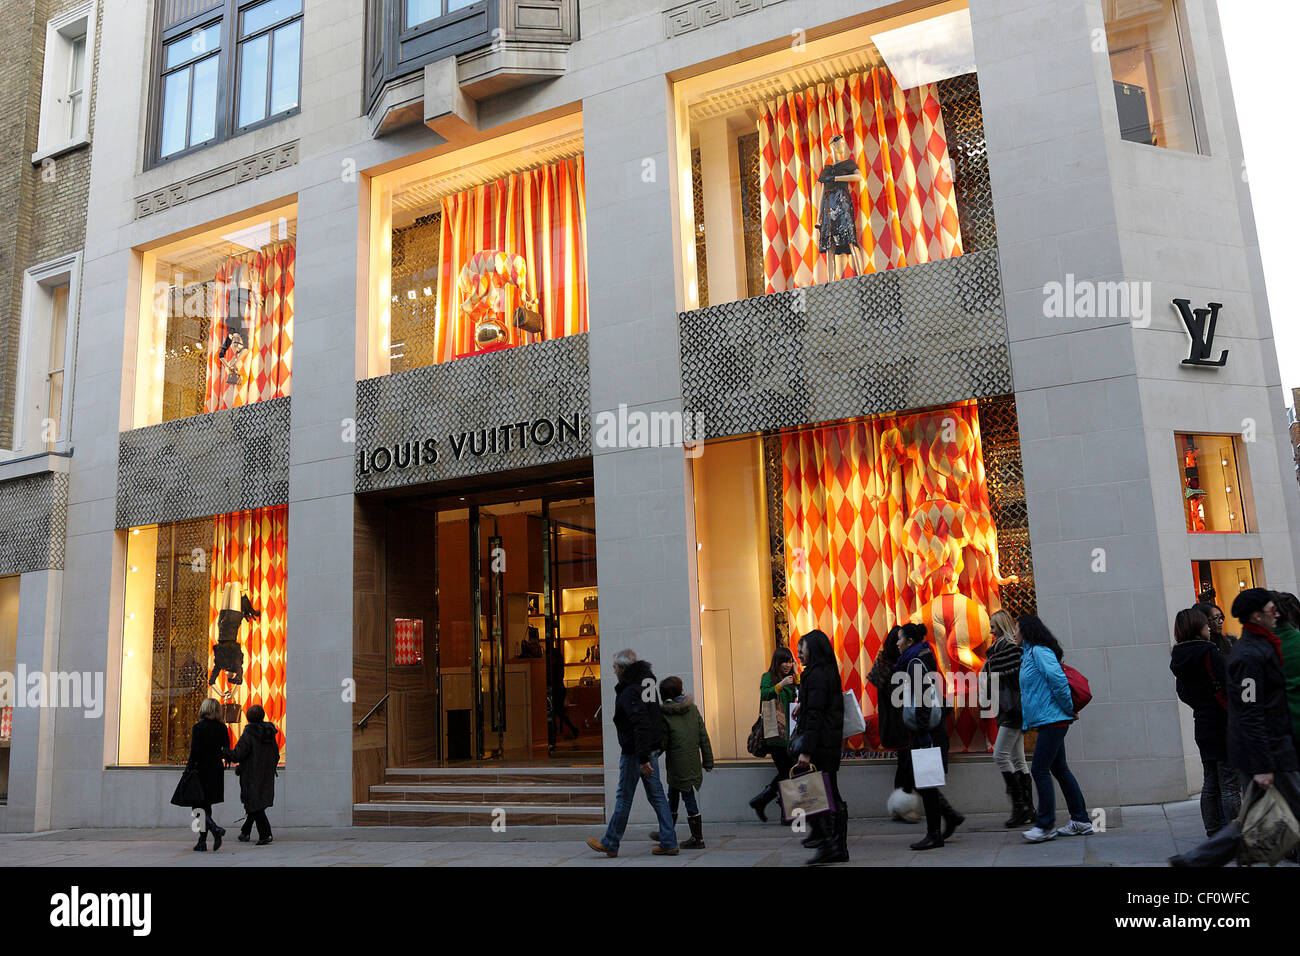 People entering Louis vuitton boutique – Stock Editorial Photo